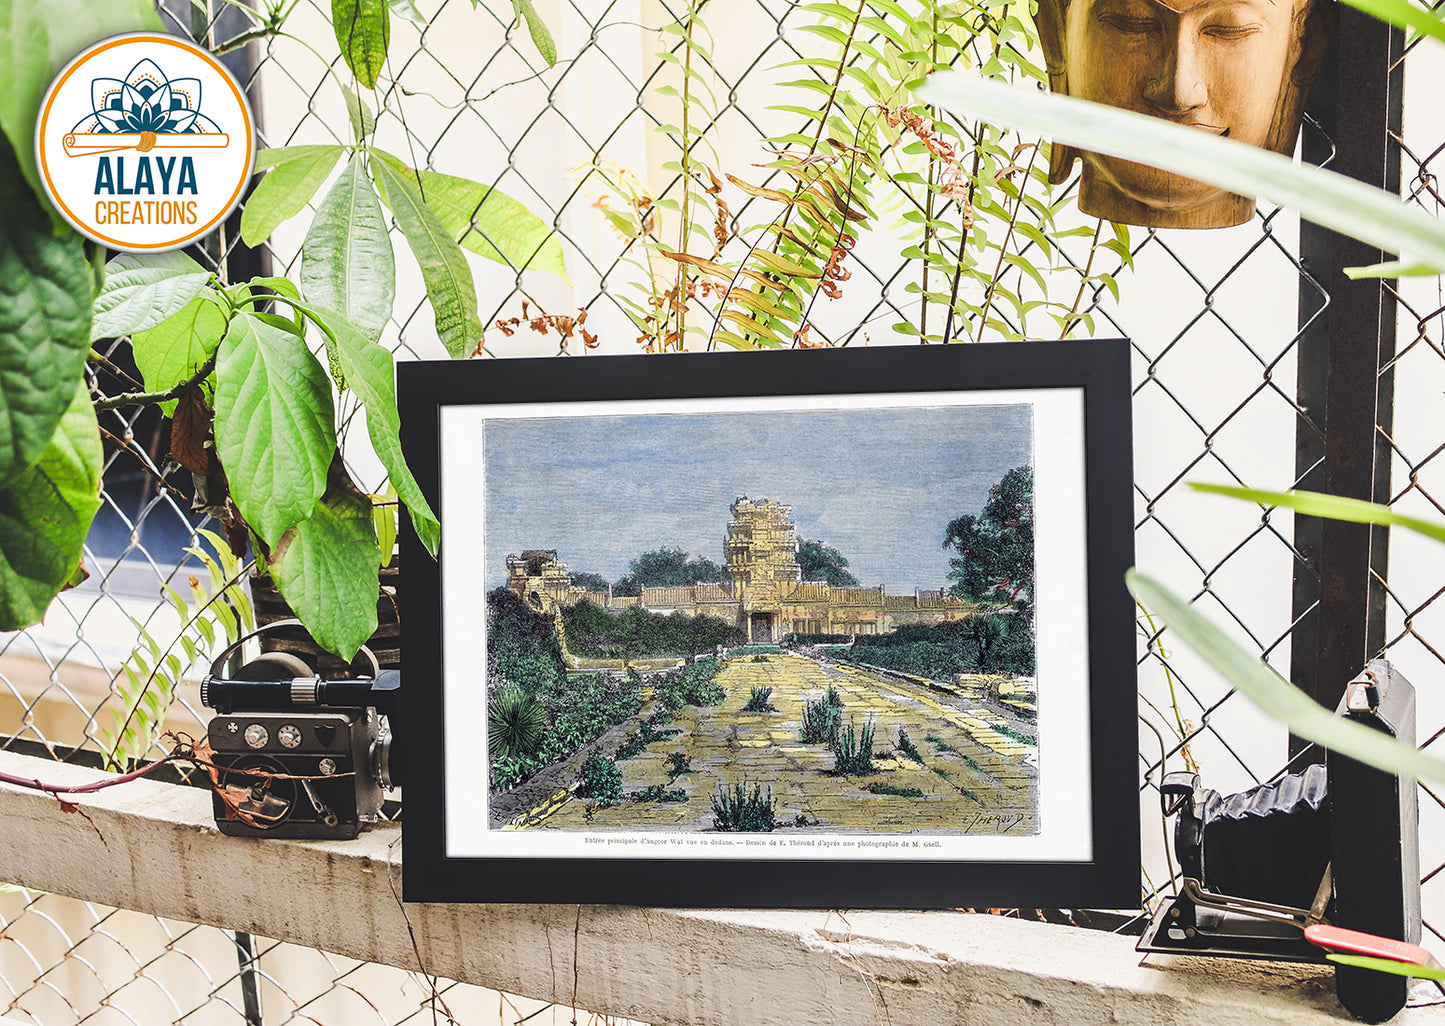 Illustration d'archives du Cambodge - Angkor Wat : Entrée principale d'Angkor Wat vue en dedans Format A3 par Alaya Créations